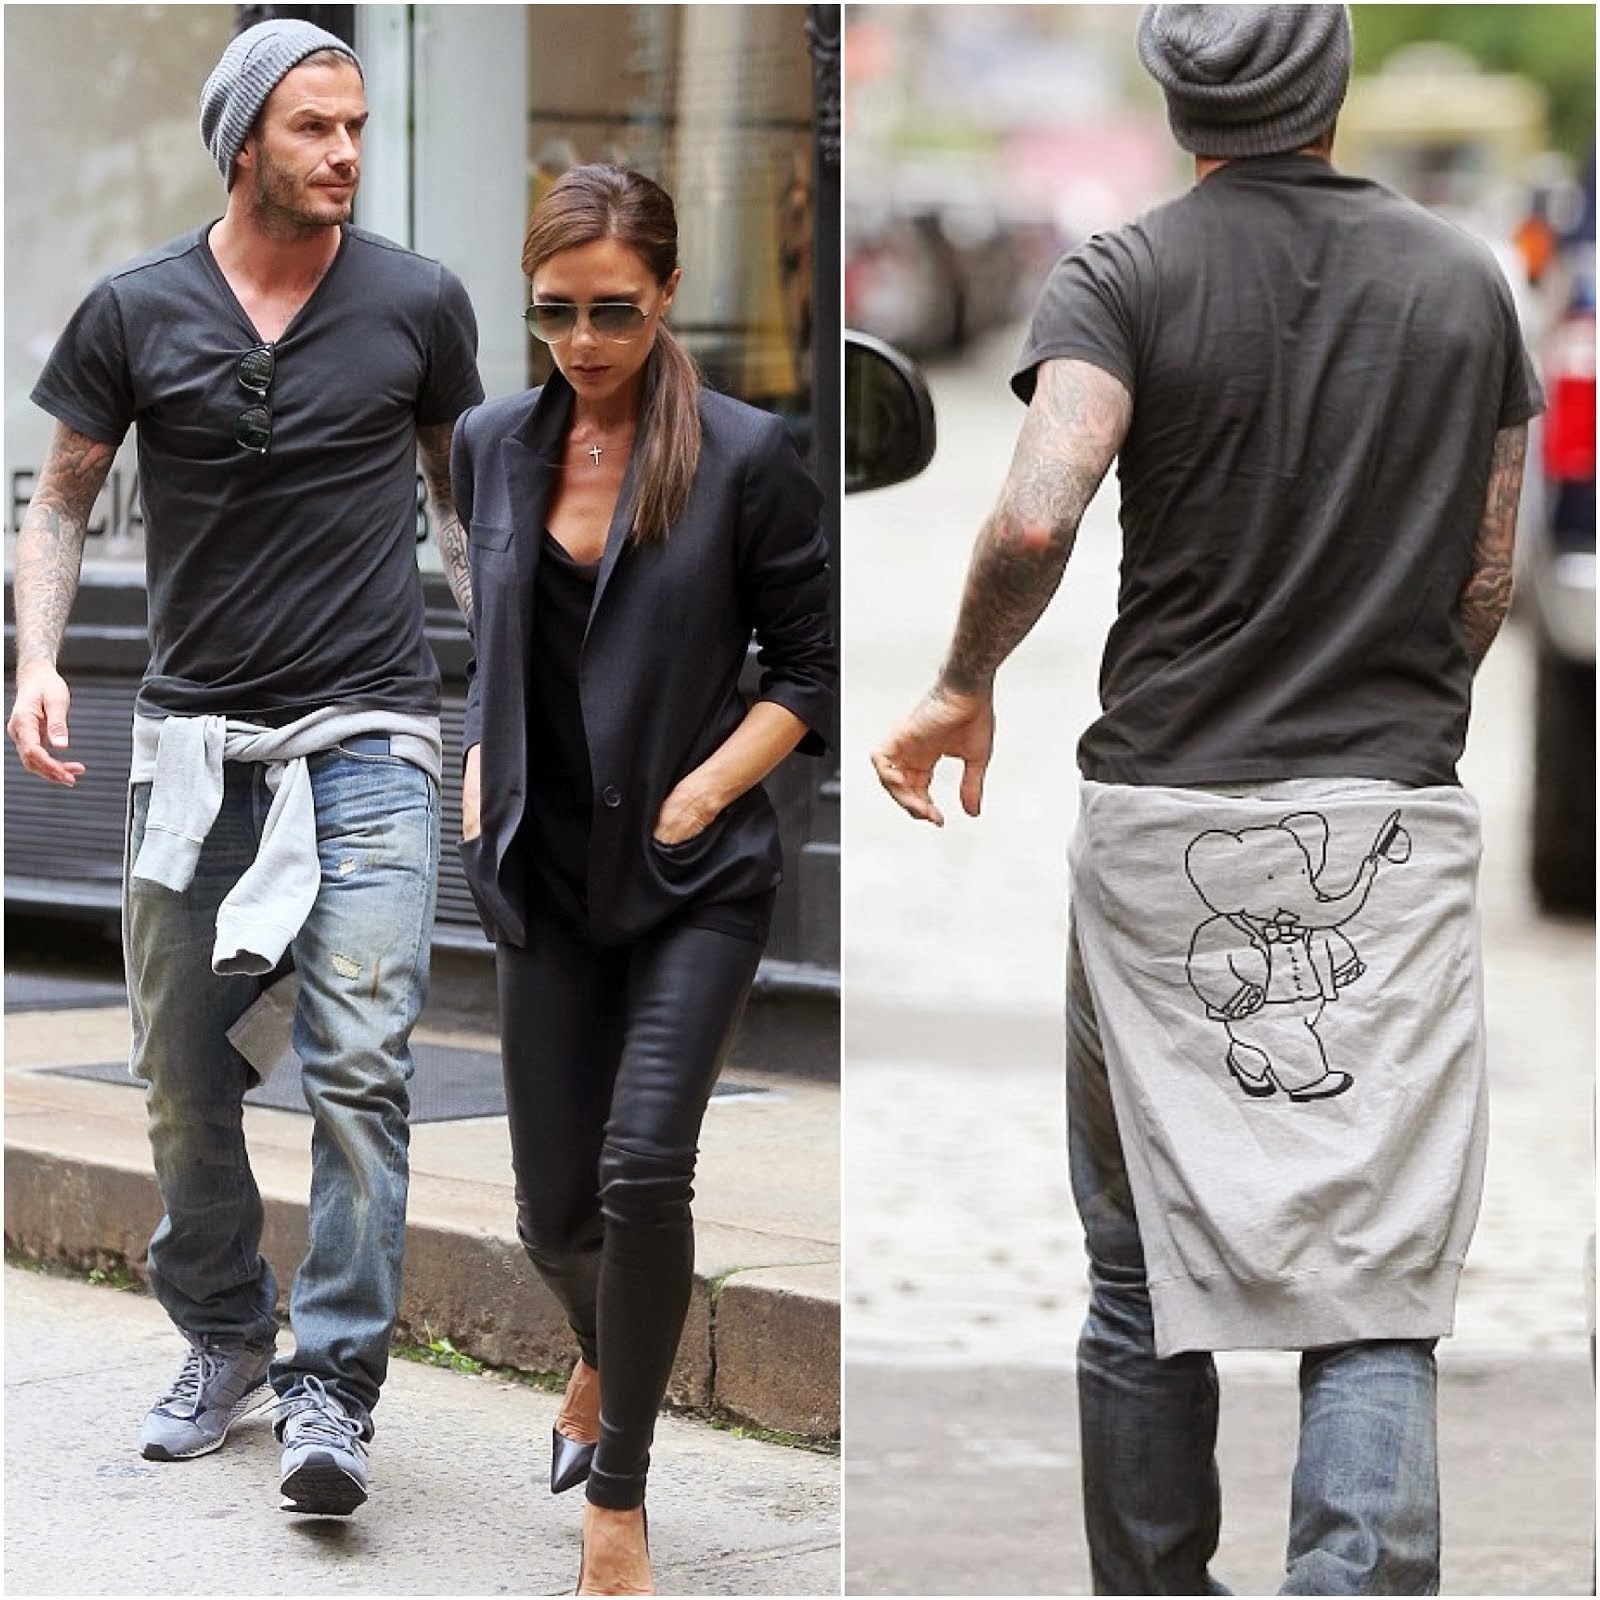 Wear It Like Beckham: David Beckham heads to NYC